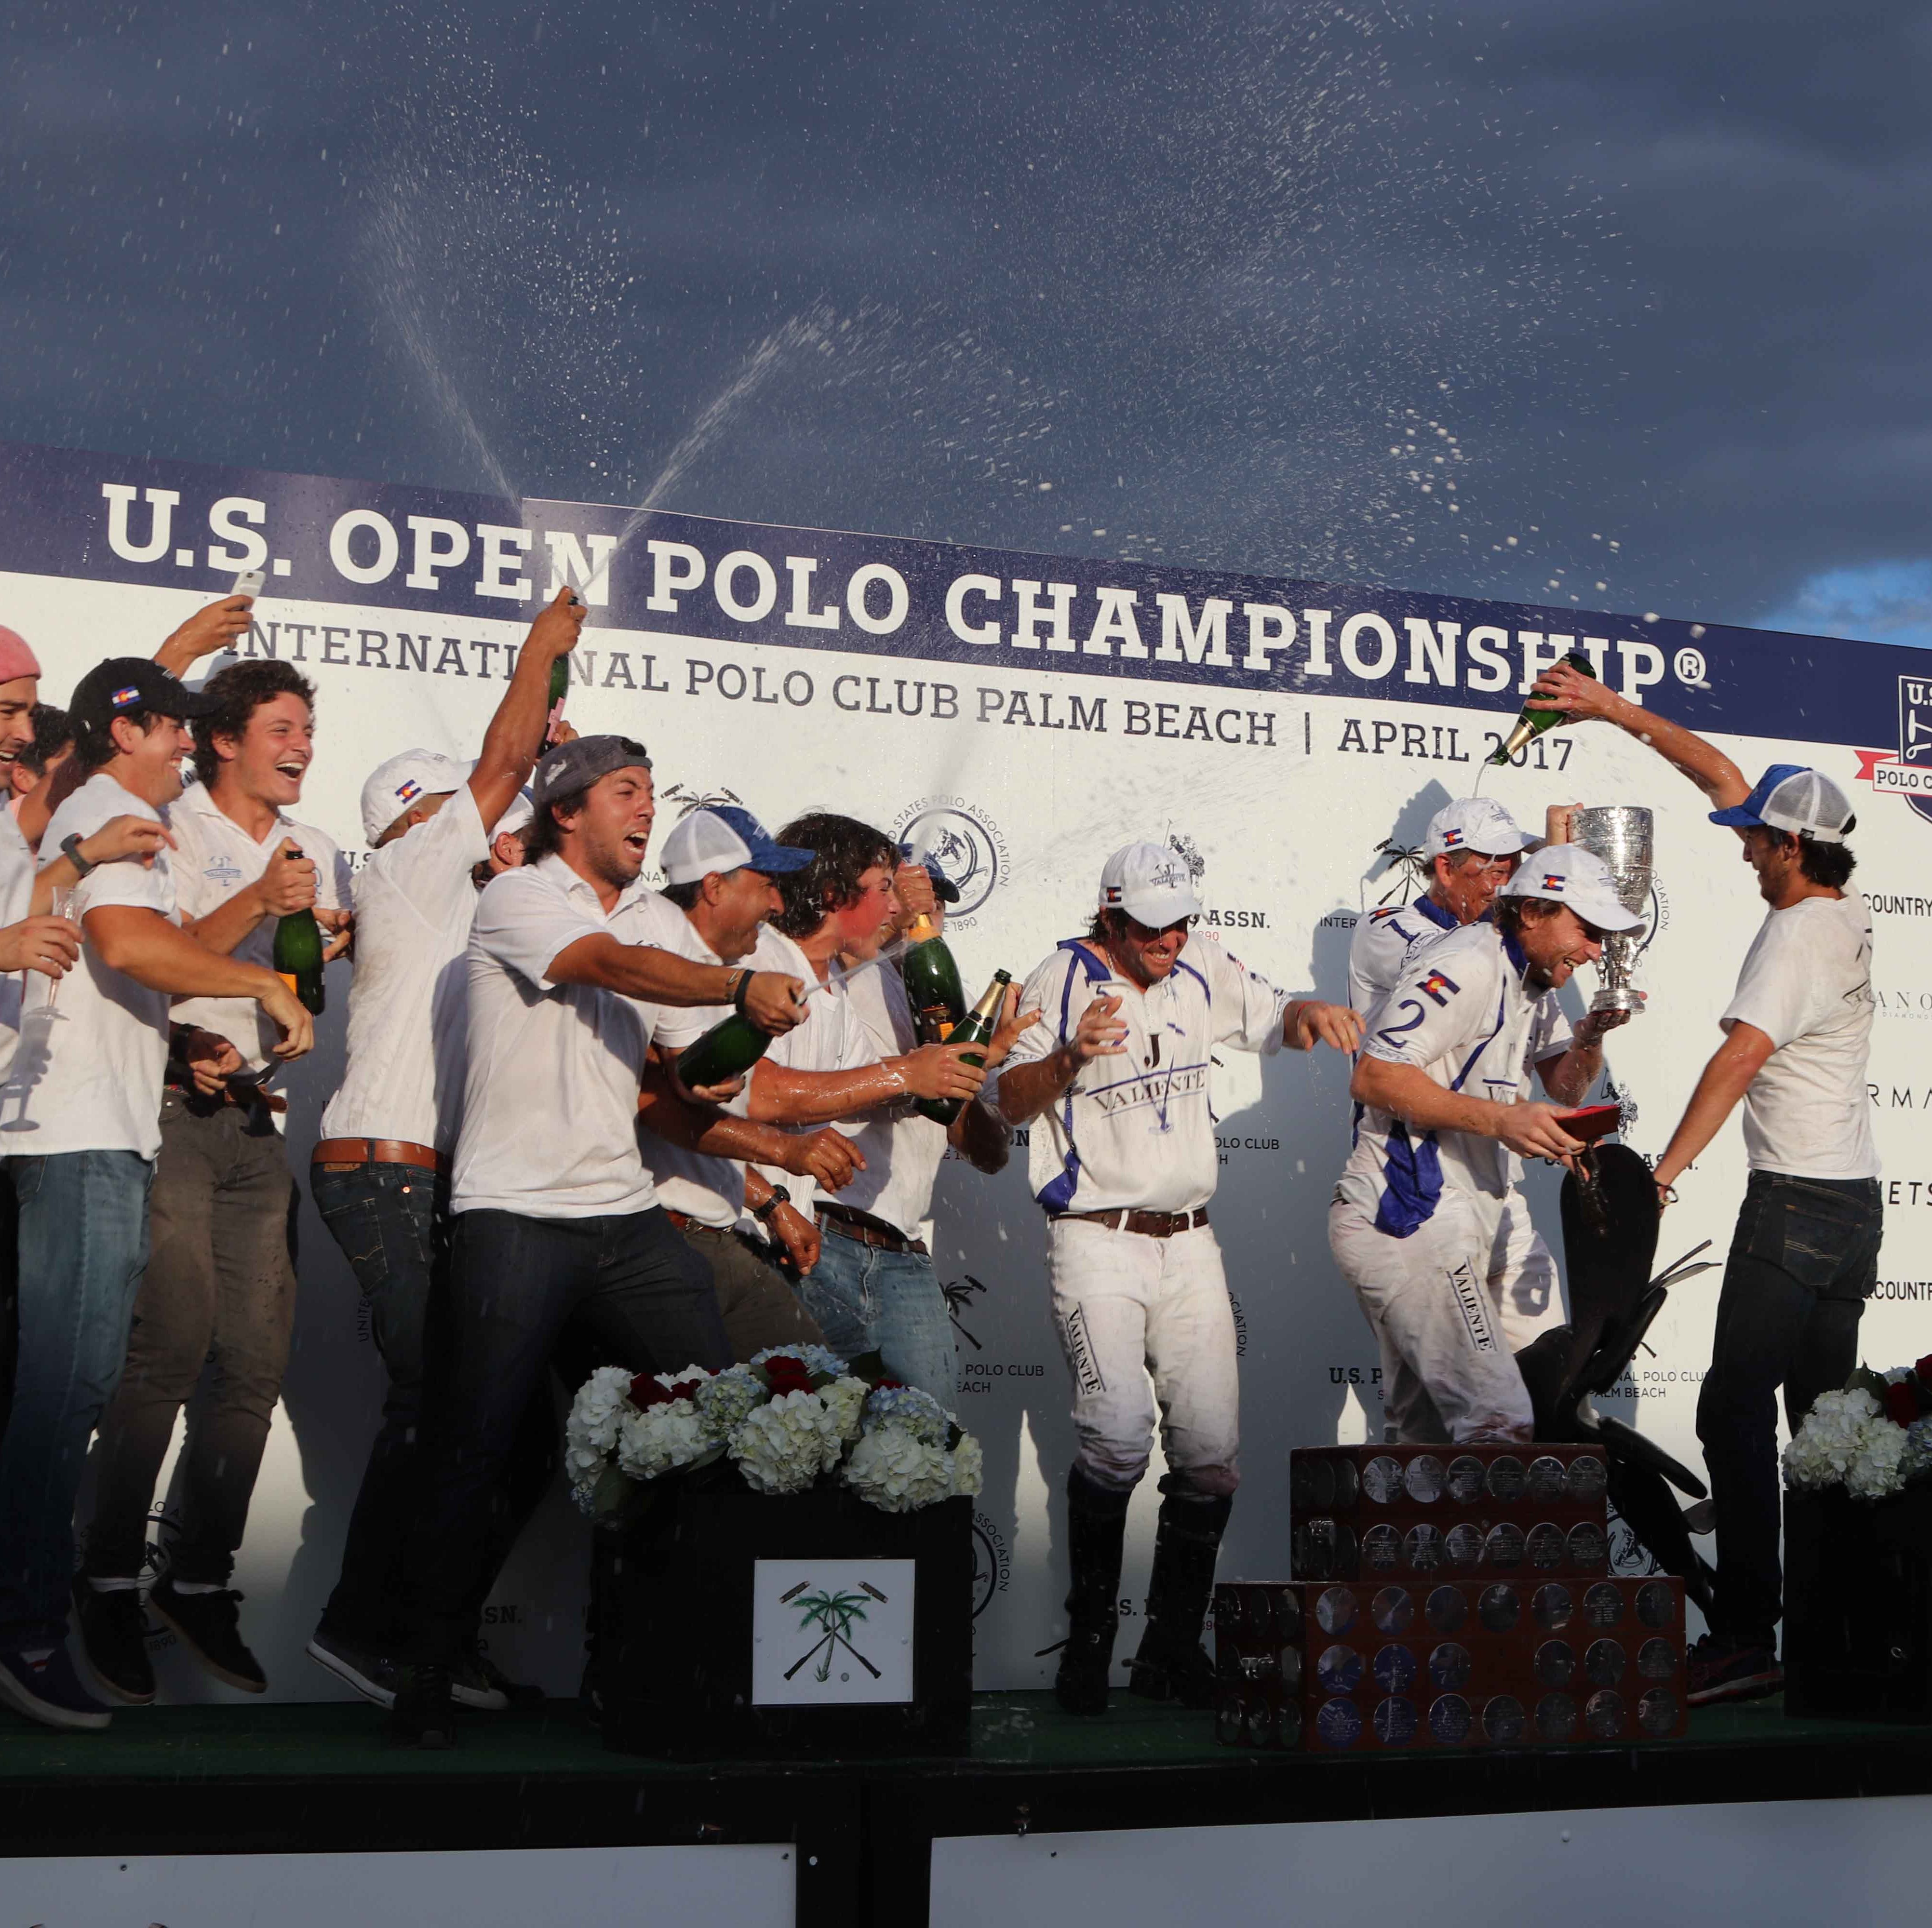 US Open Polo Championship